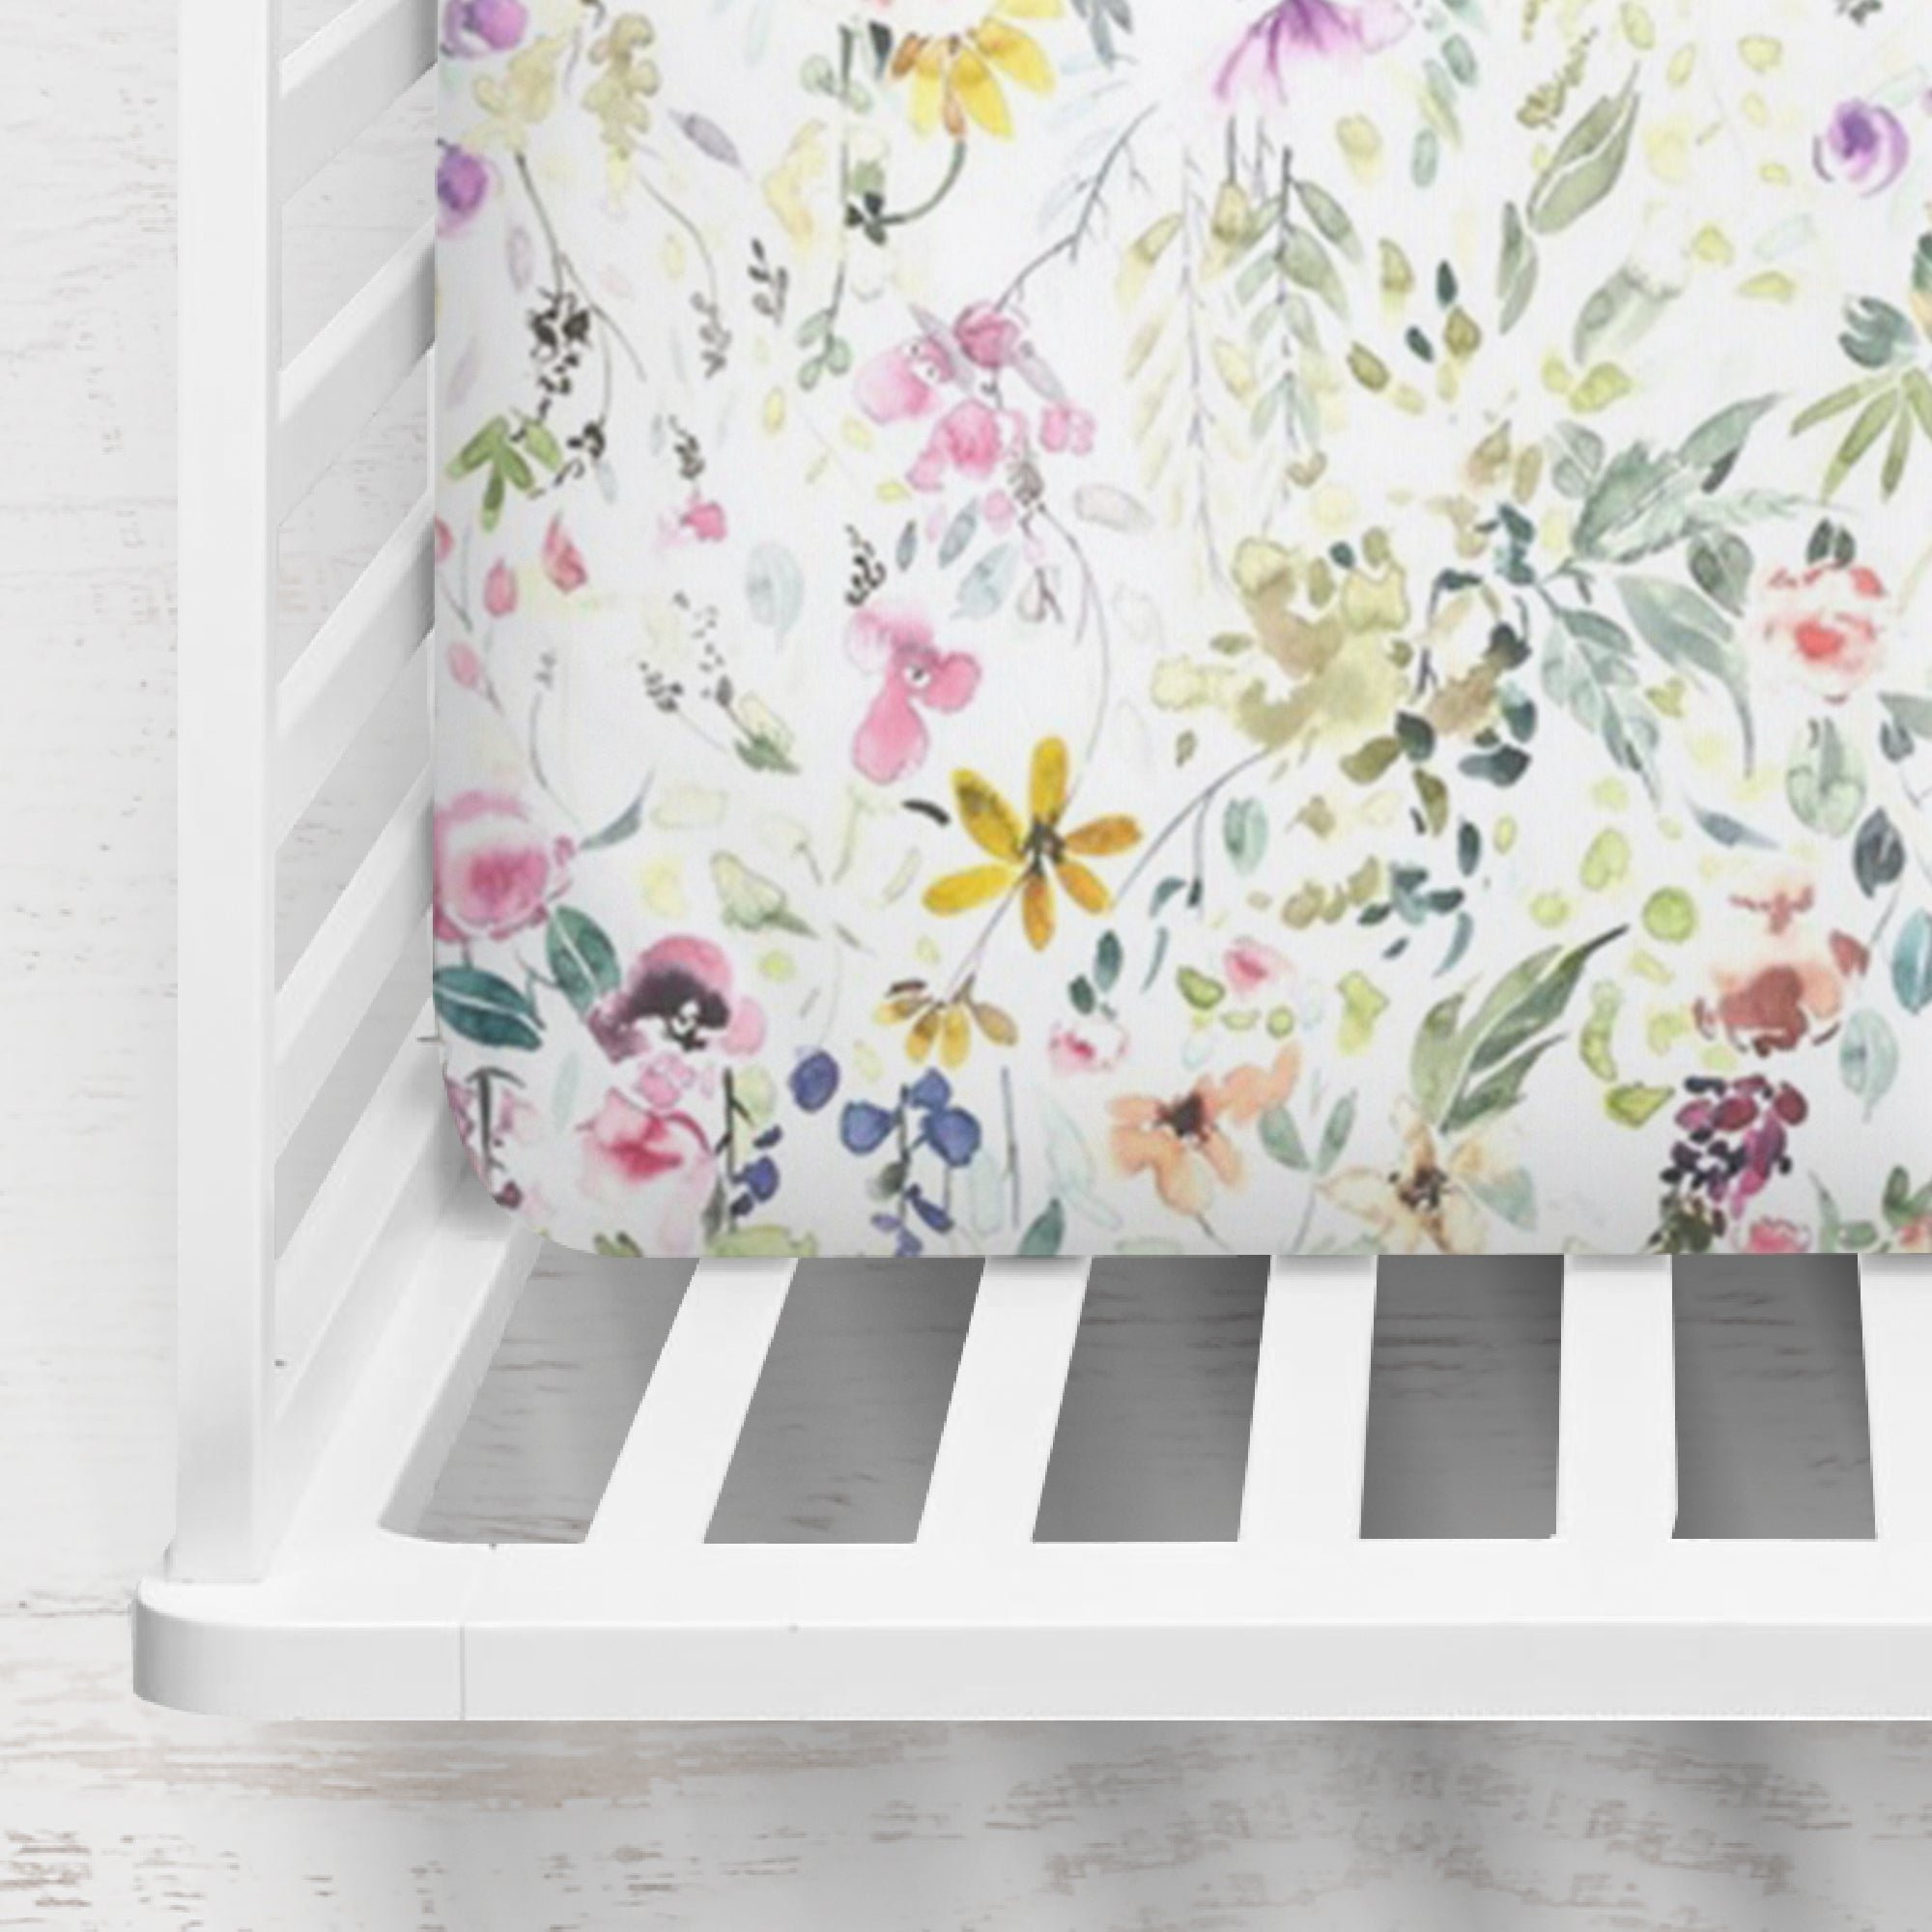 Floral Crib Sheet